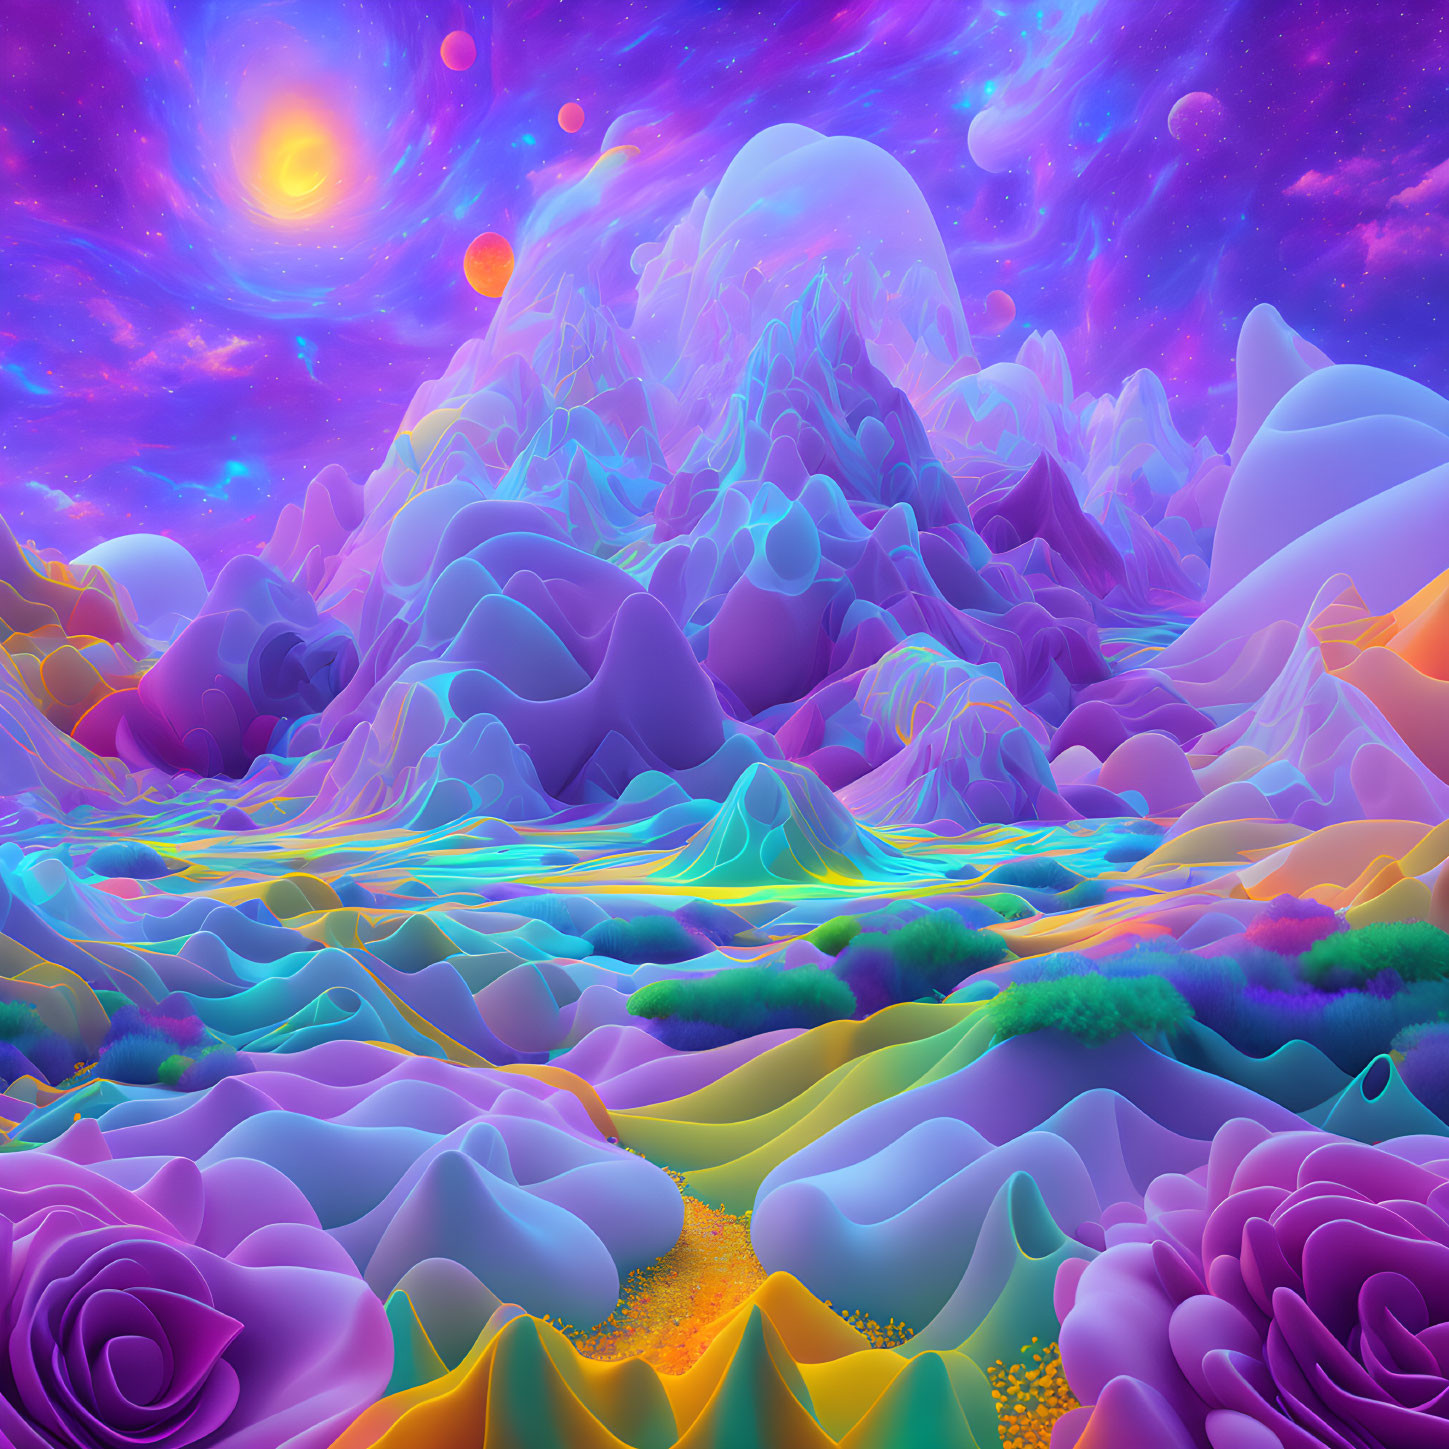 Surreal digital artwork: vibrant neon landscape with cosmic sky